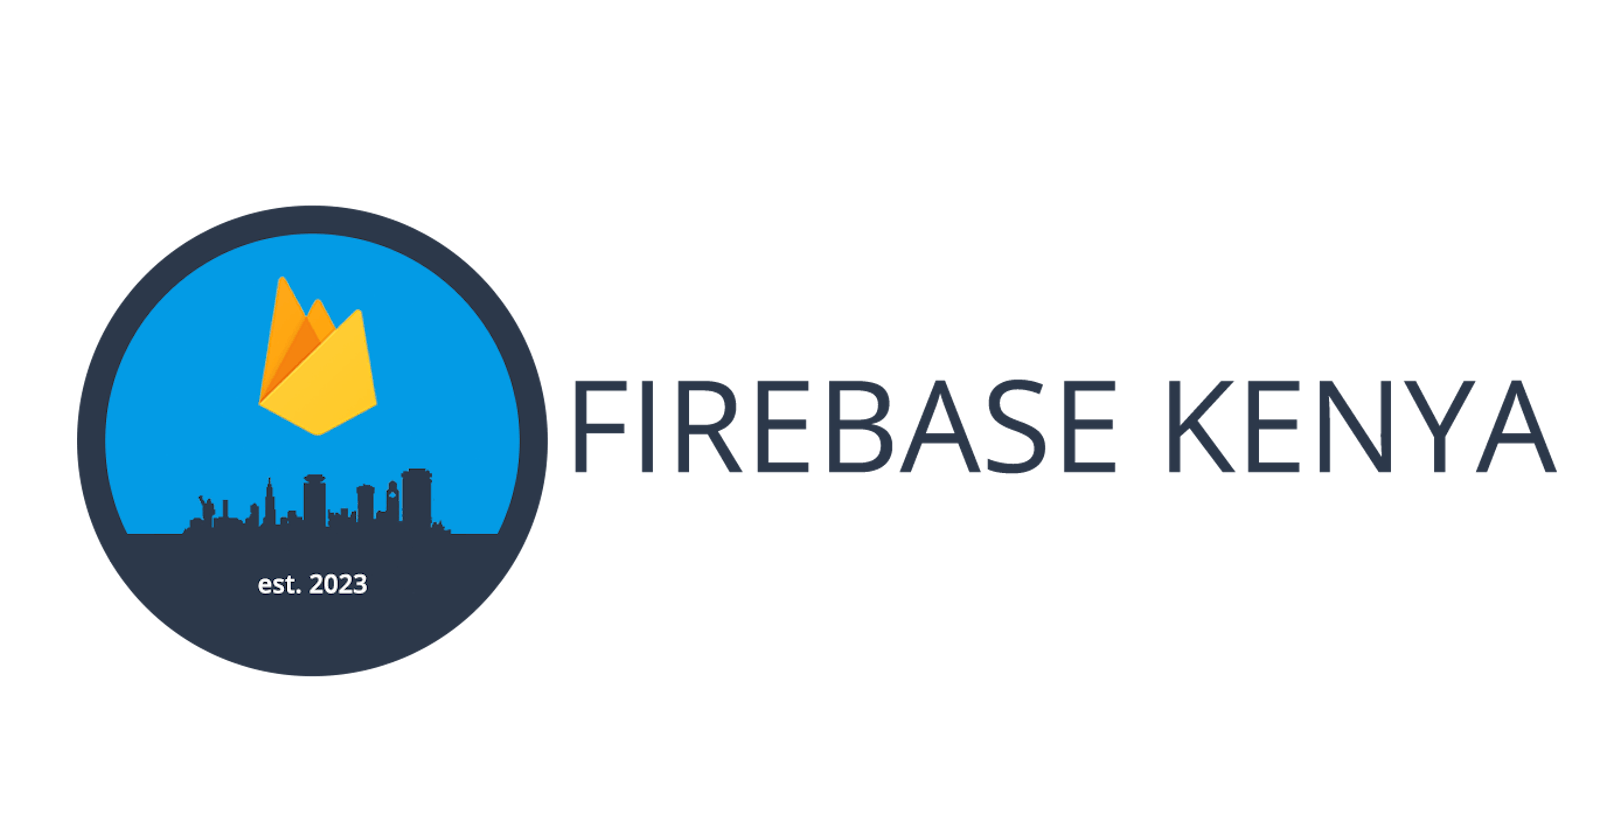 Welcome to Firebase Kenya🔥🇰🇪